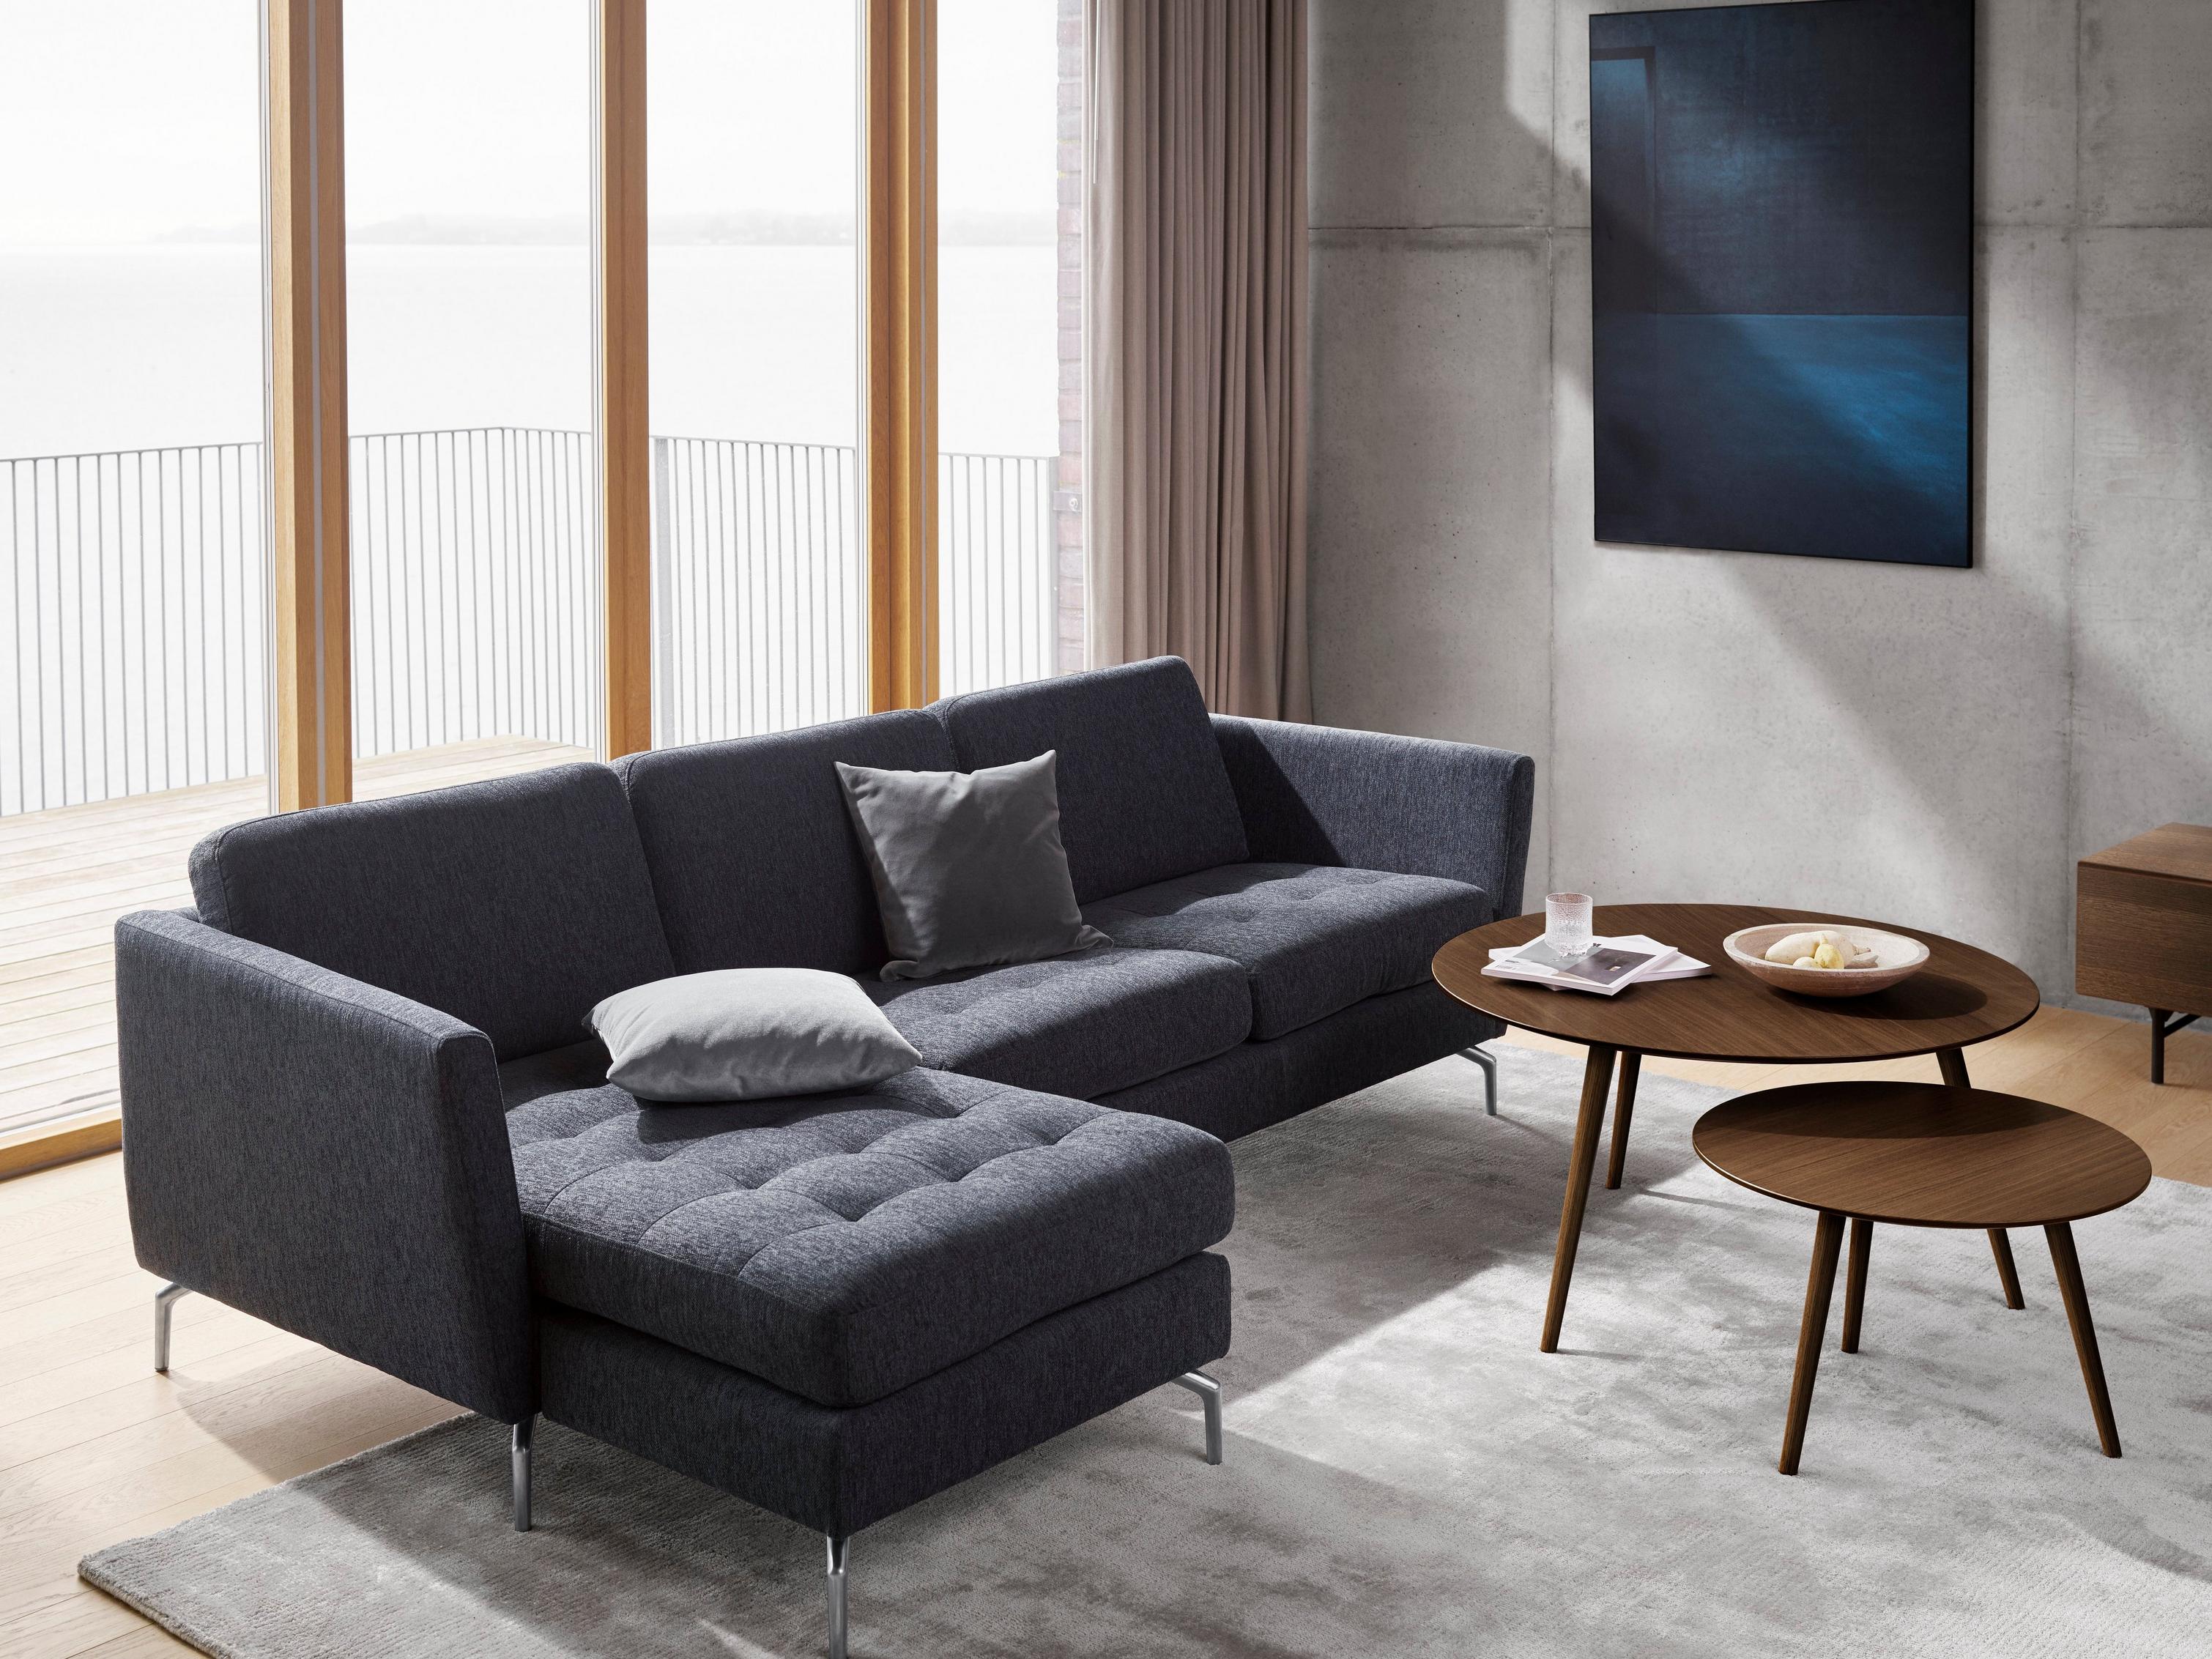 Sala para relajarse con sofá Osaka en tela Bristol color azul y mesas de centro Bornholm en chapa de roble oscuro.